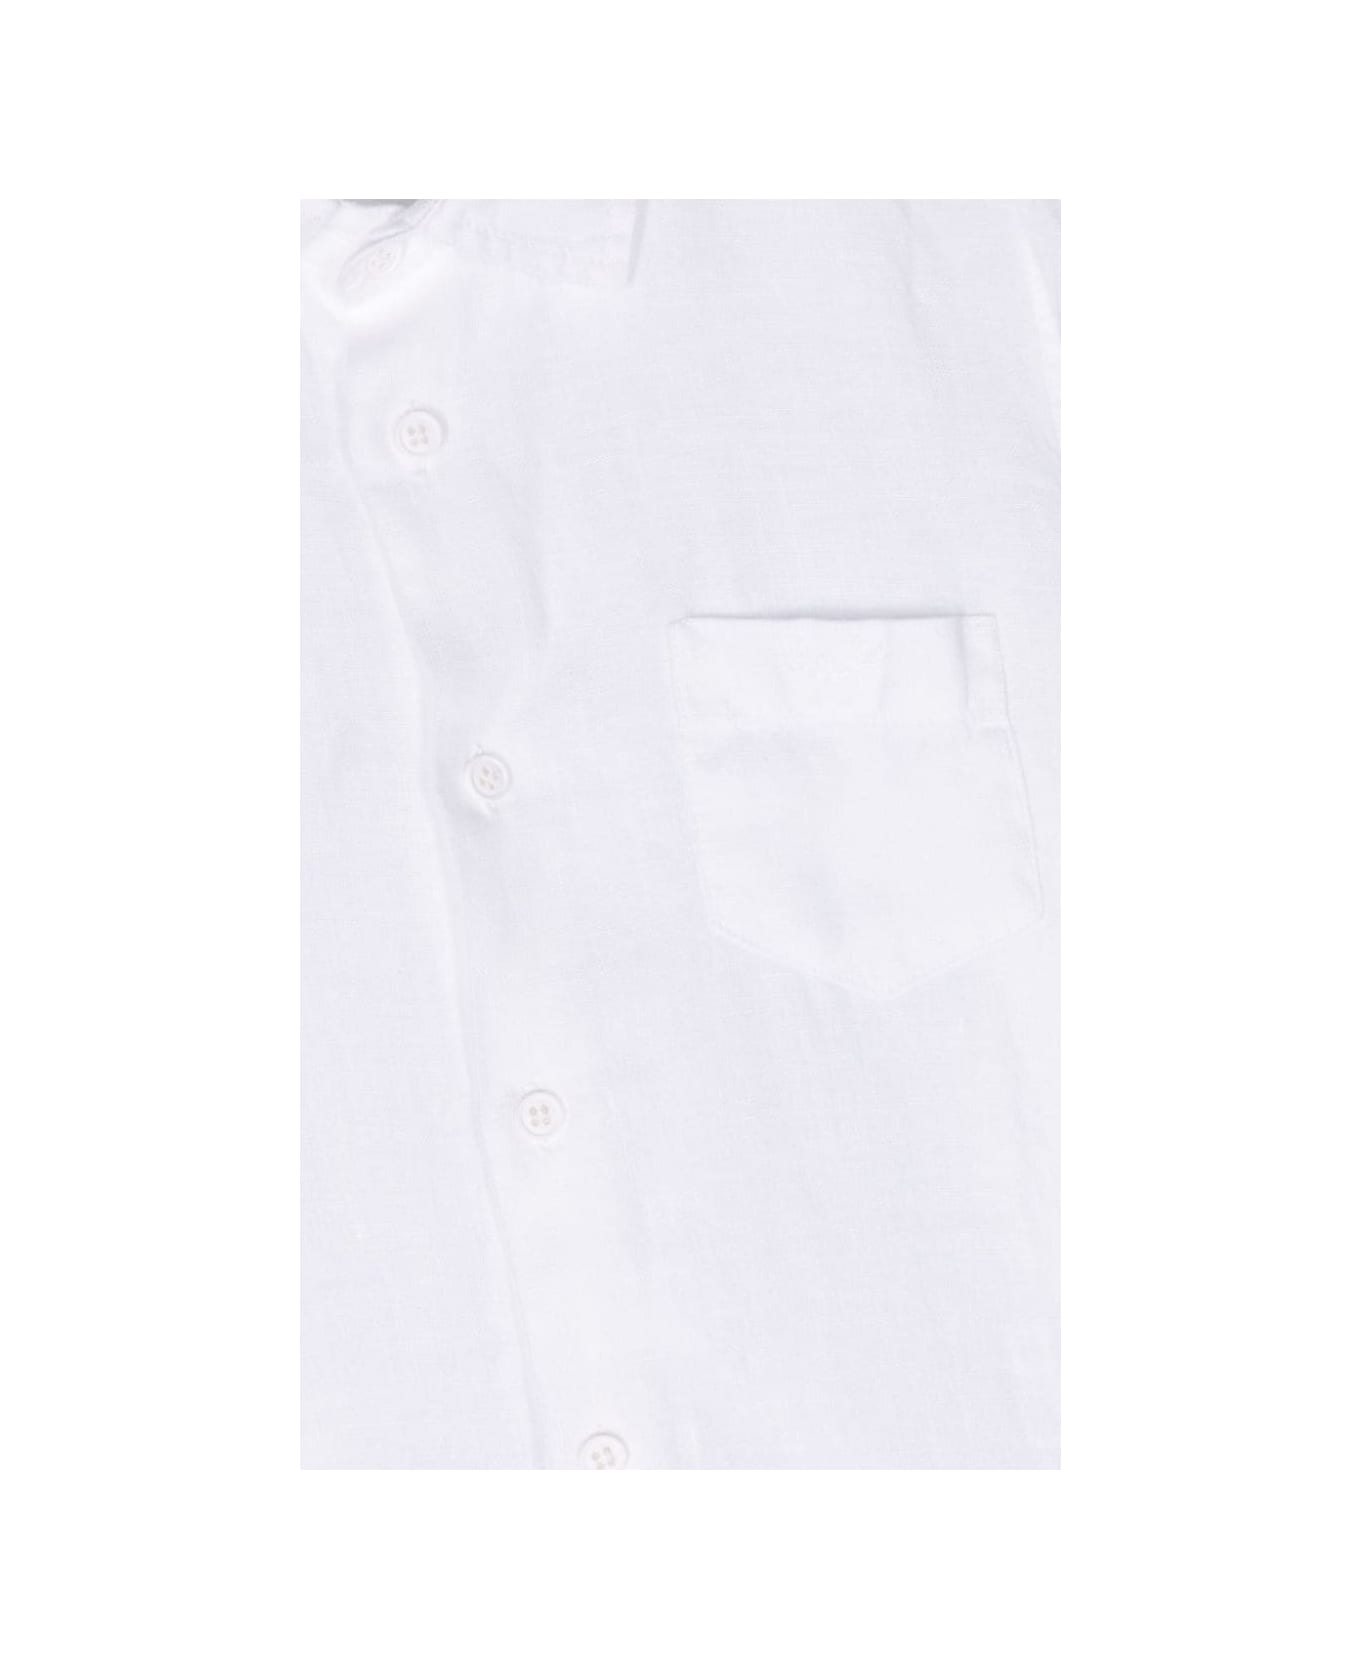 Il Gufo White Linen Shirt With Pocket - Bianco